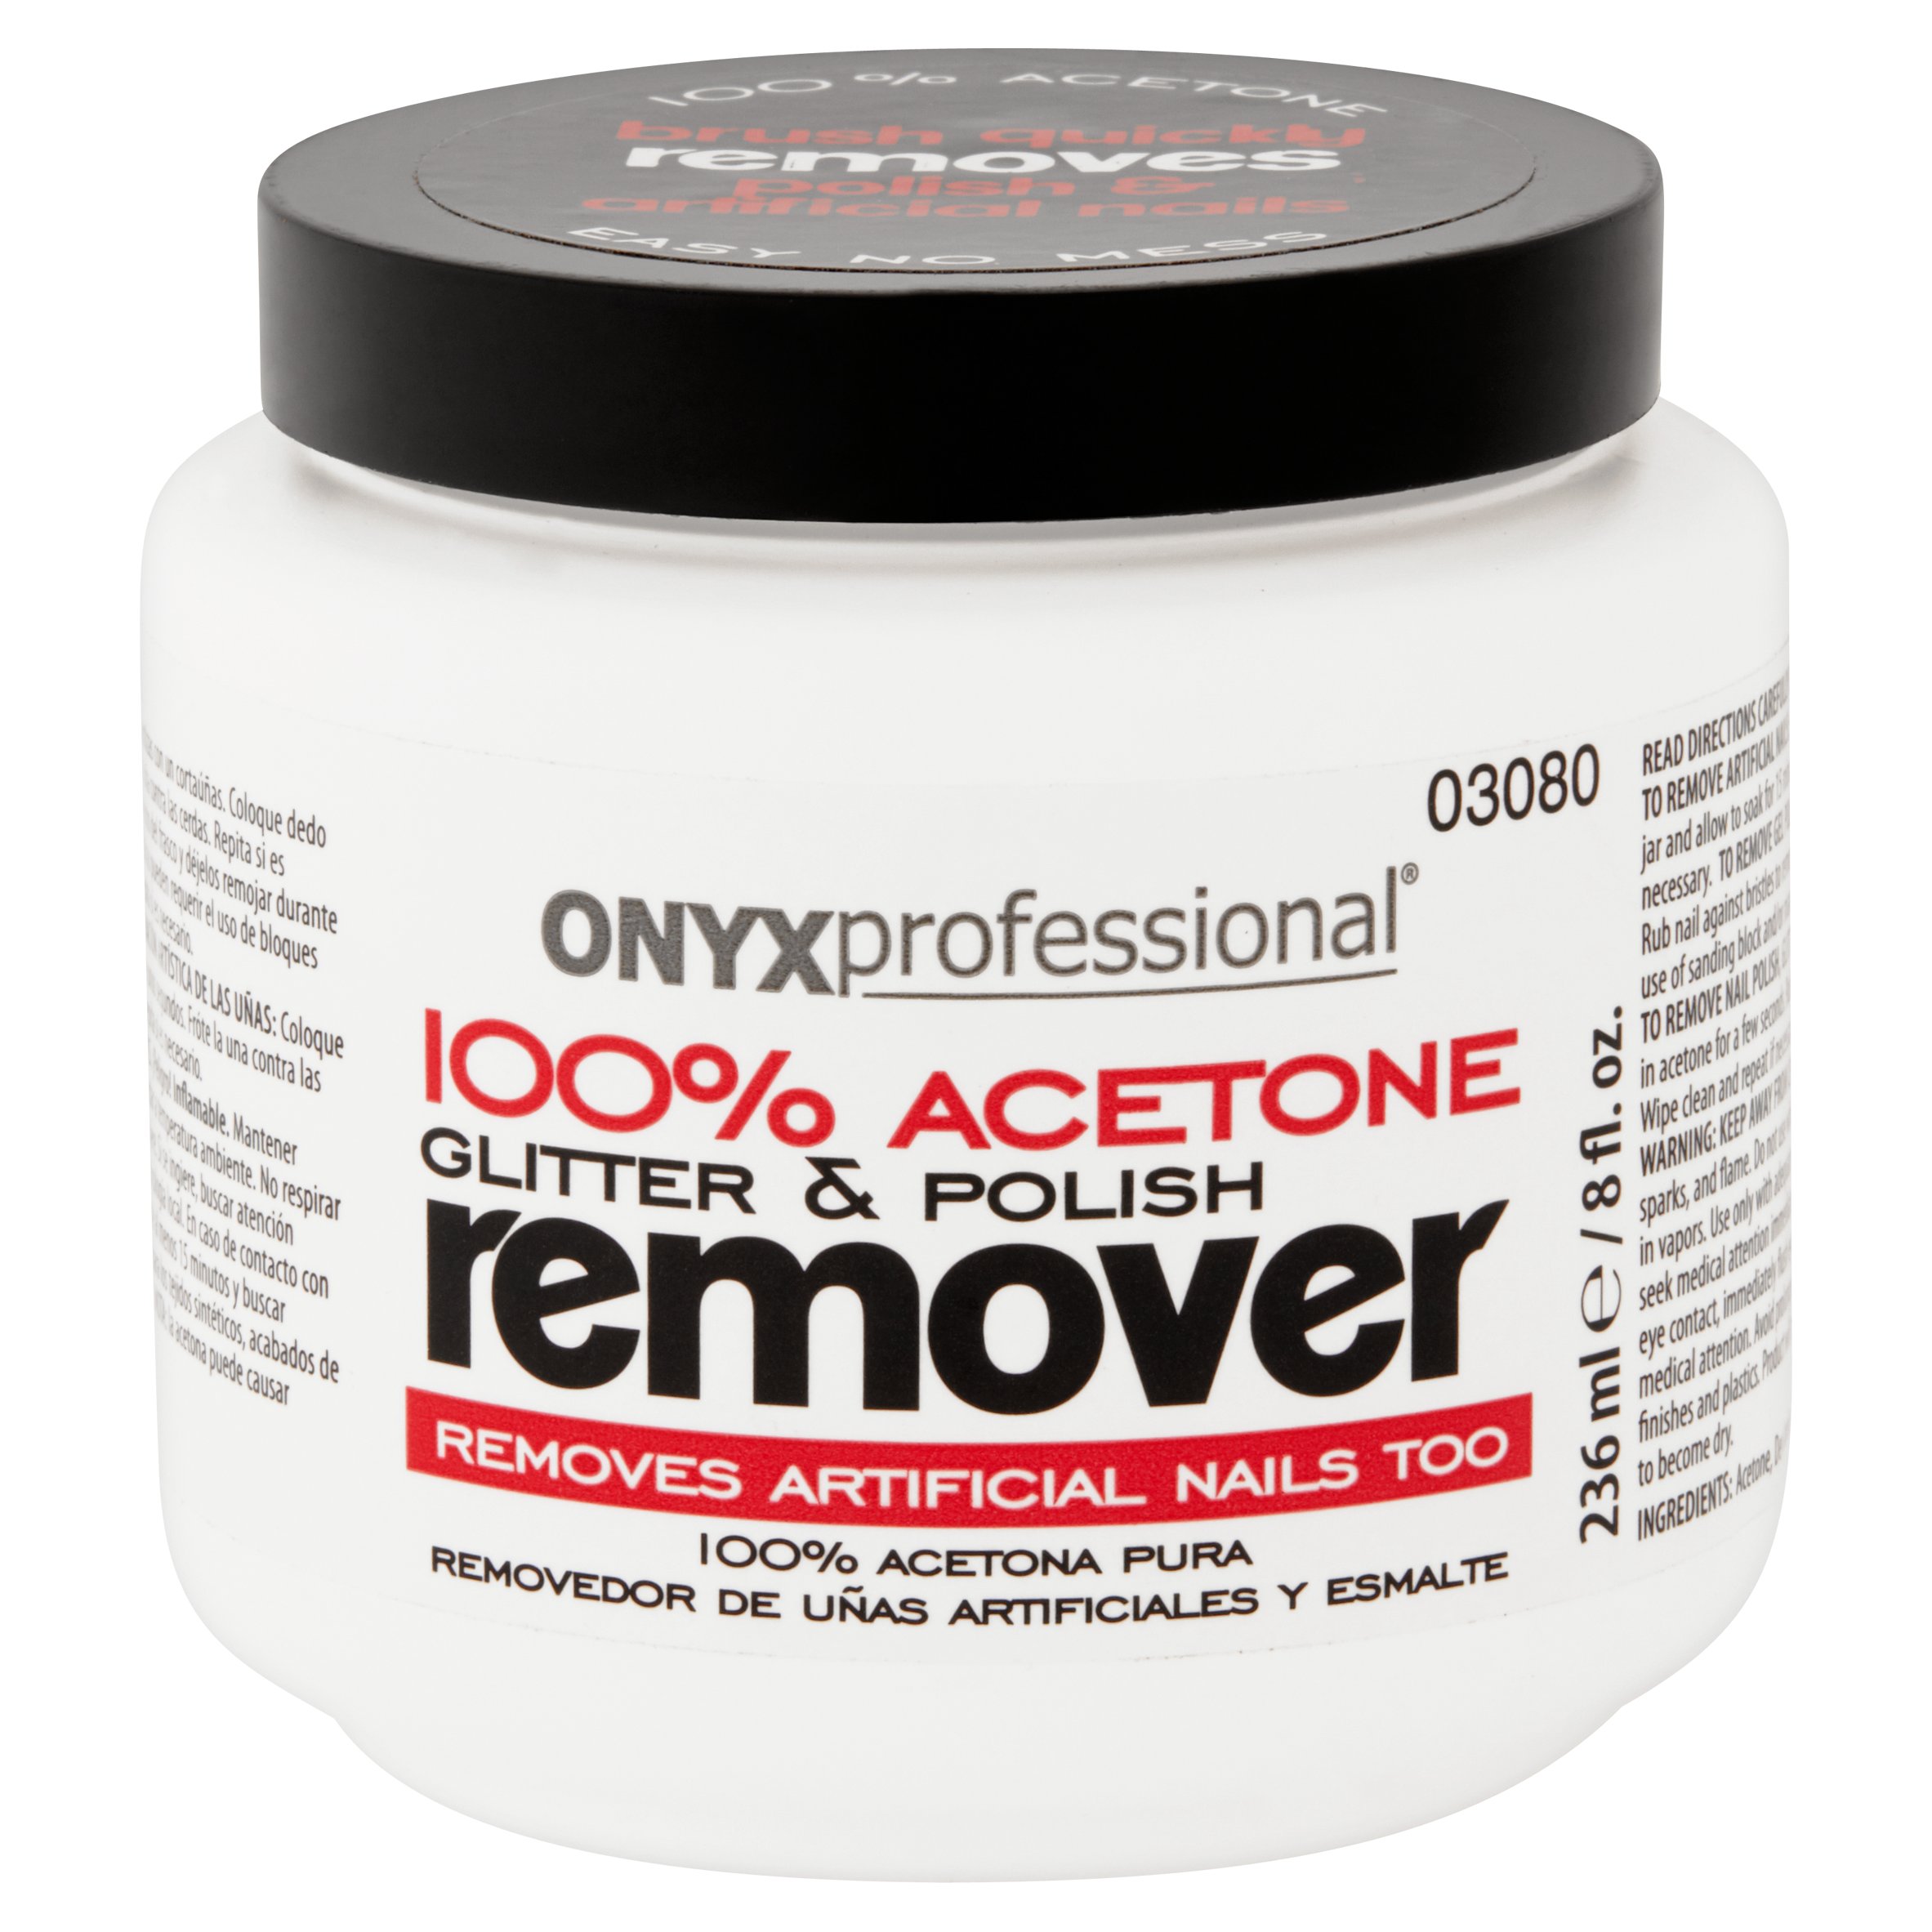 Onyx Professional 100% Acetone Glitter & Polish Remover, 8 fl oz - image 2 of 5